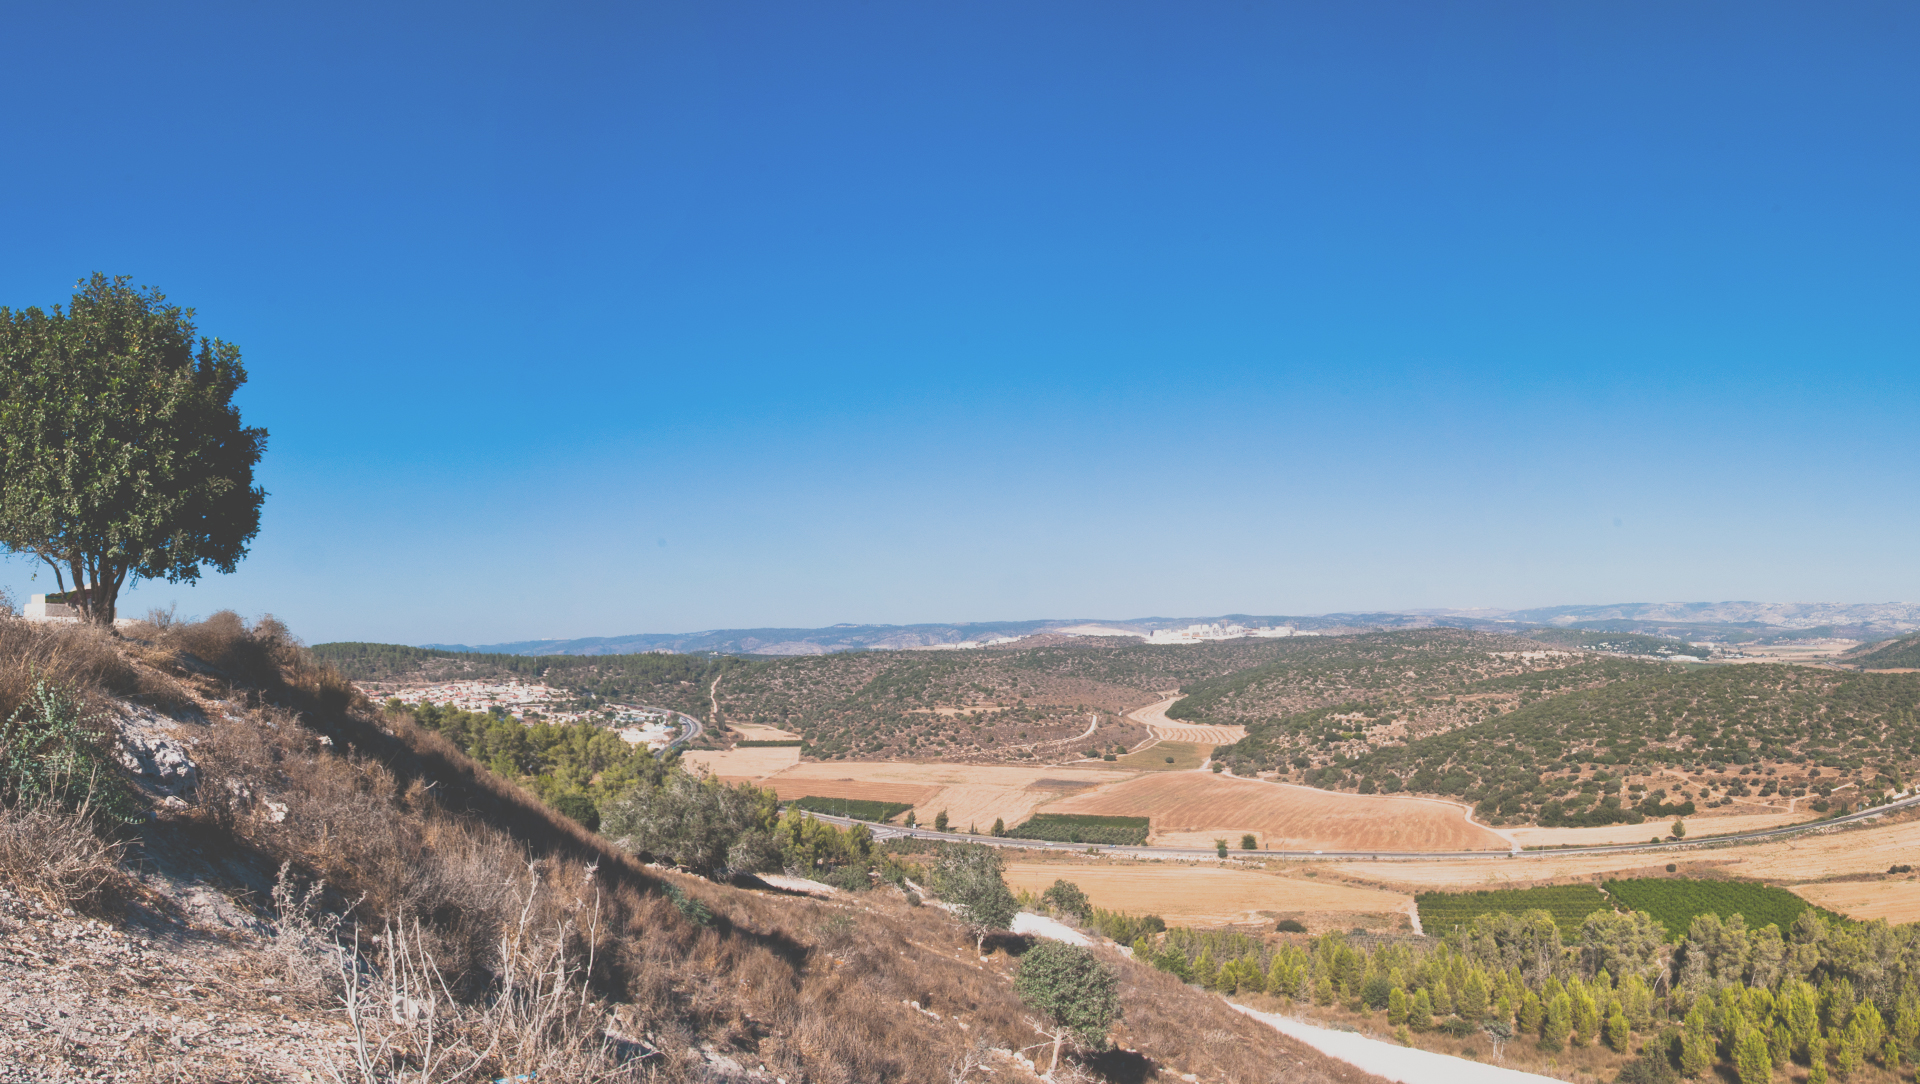 The Elah Valley, David and Goliath